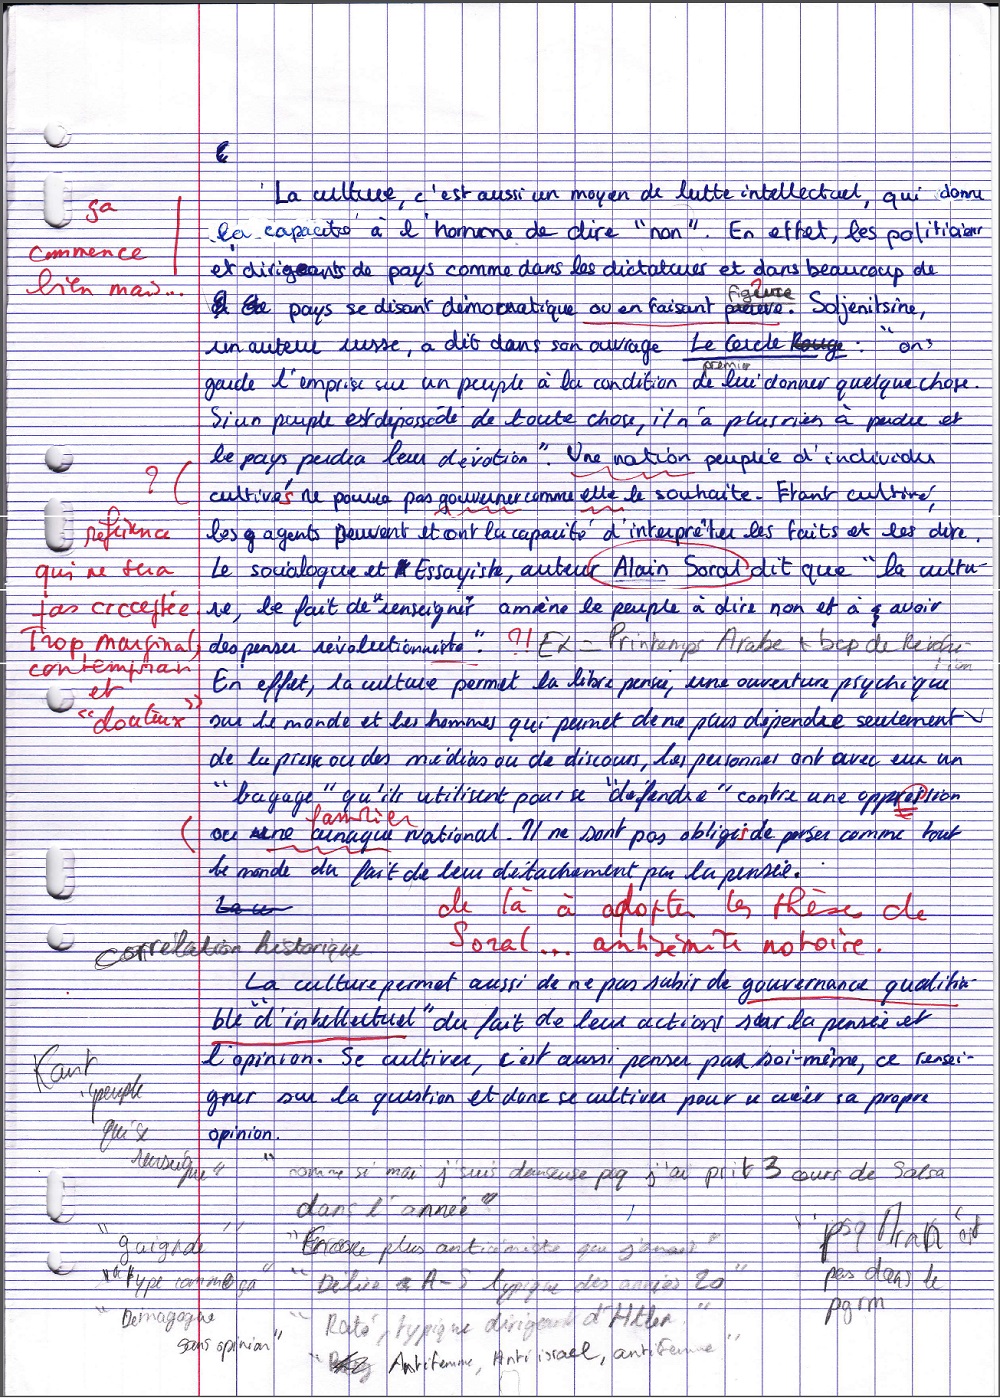 Dissertation francais wiki